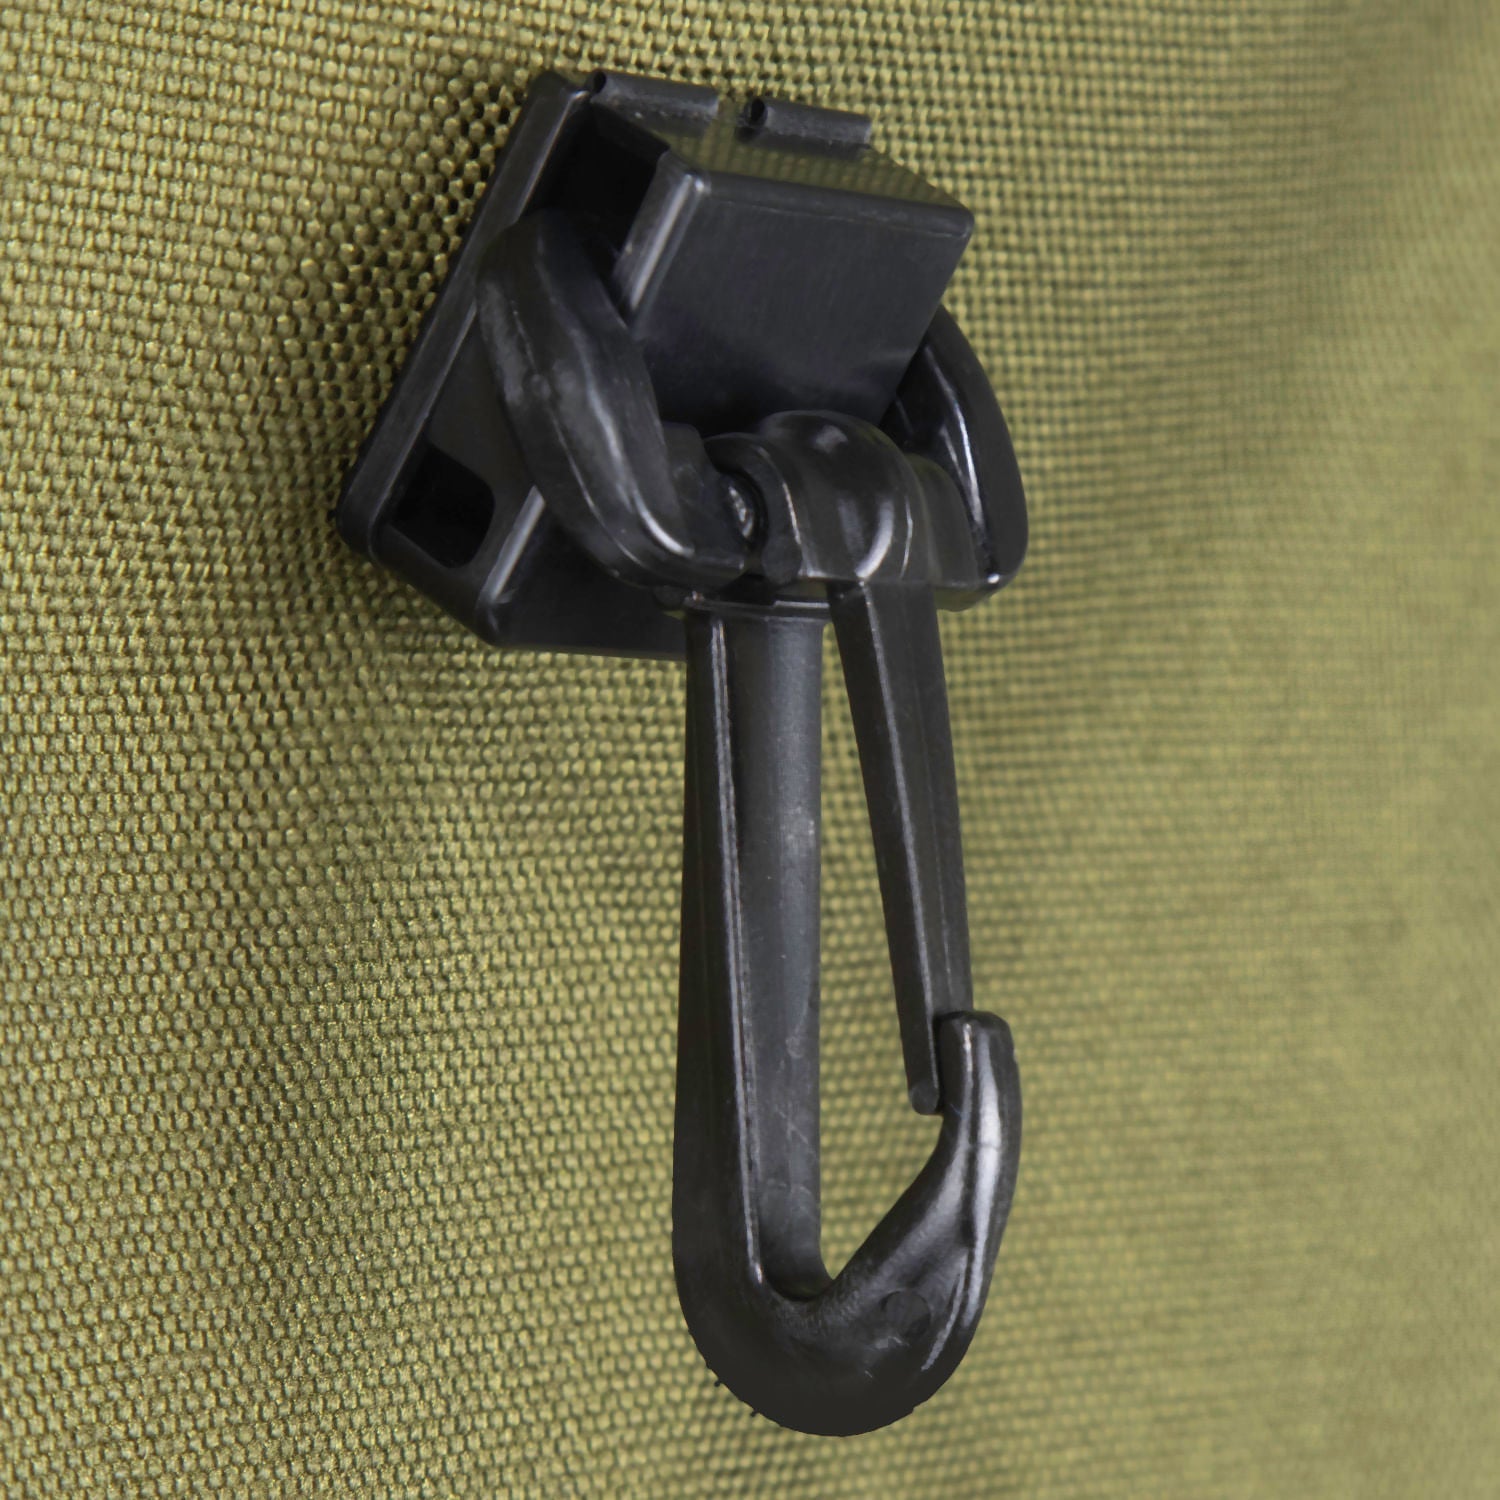 Pin-Mounted Bag Key Clip